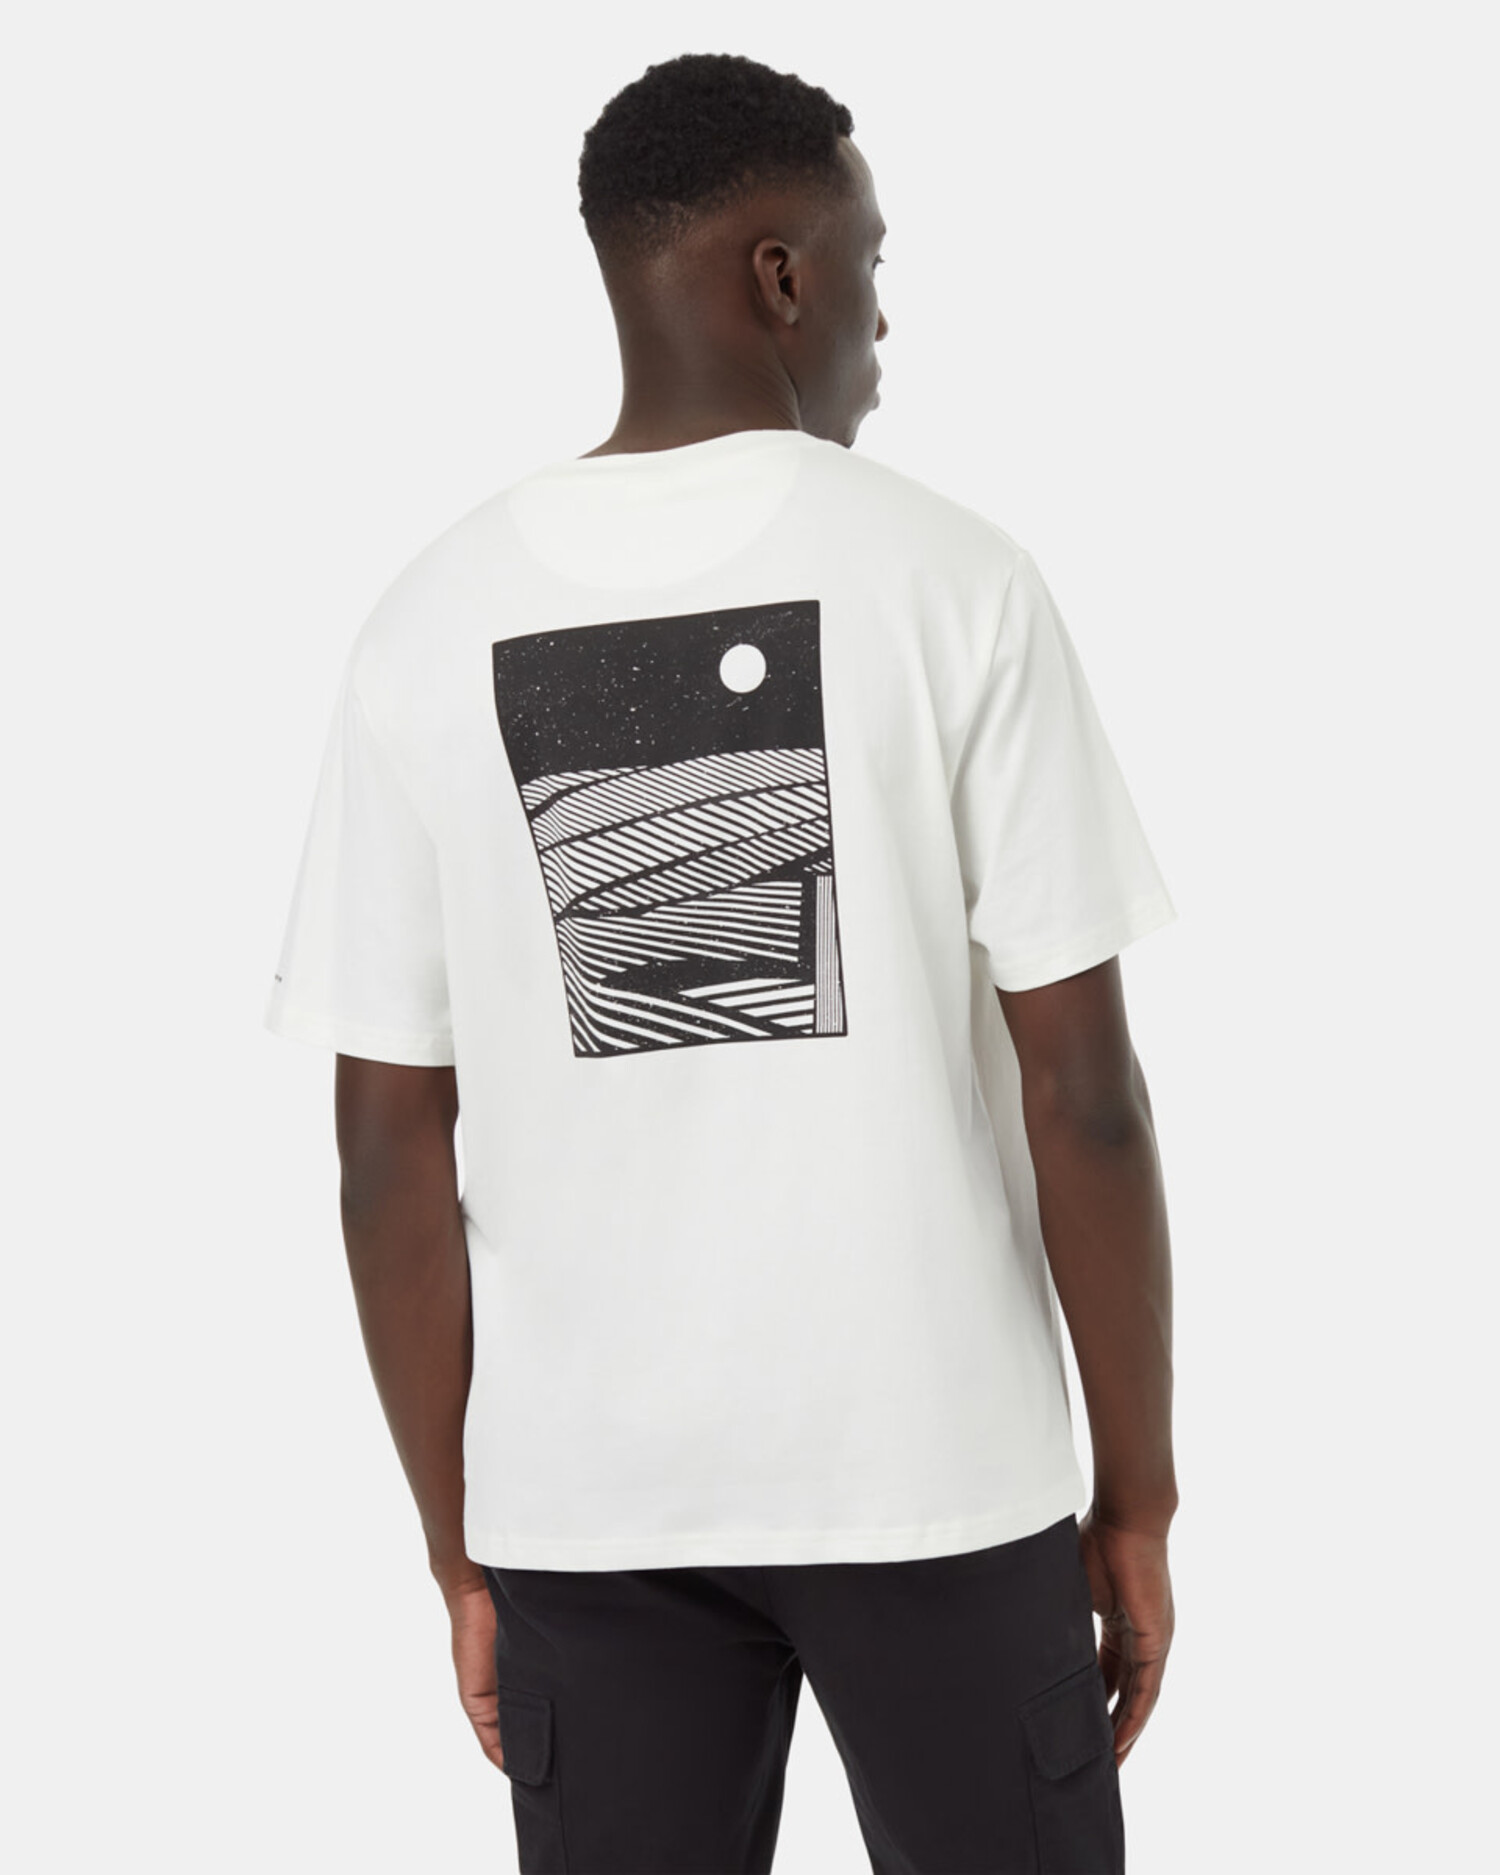 TENTREE Mens Regenerative Field T-Shirt Undyed/Meteorite Black